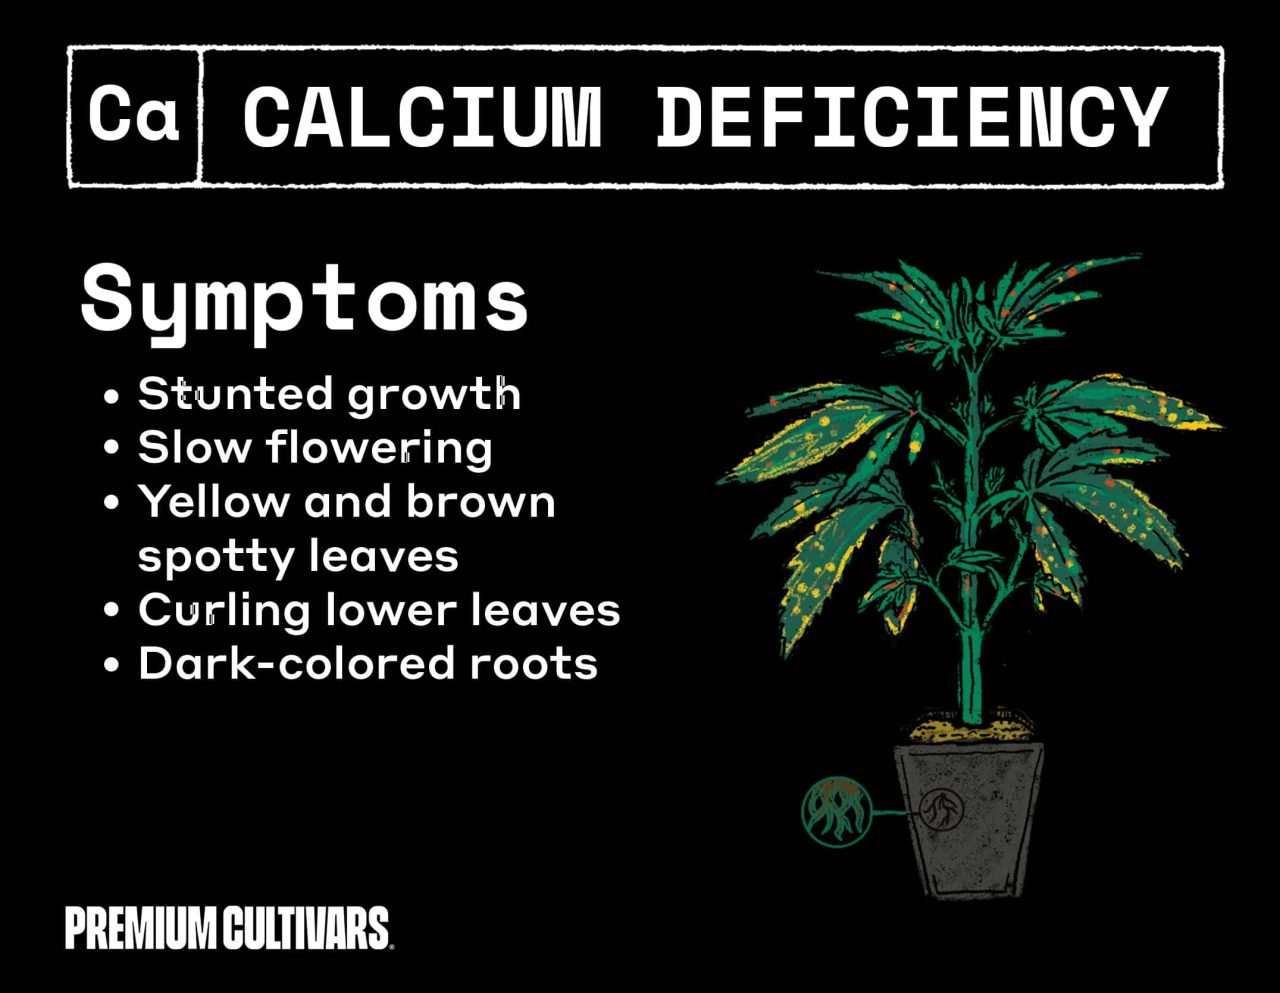 Calcium deficiency in weed symptoms